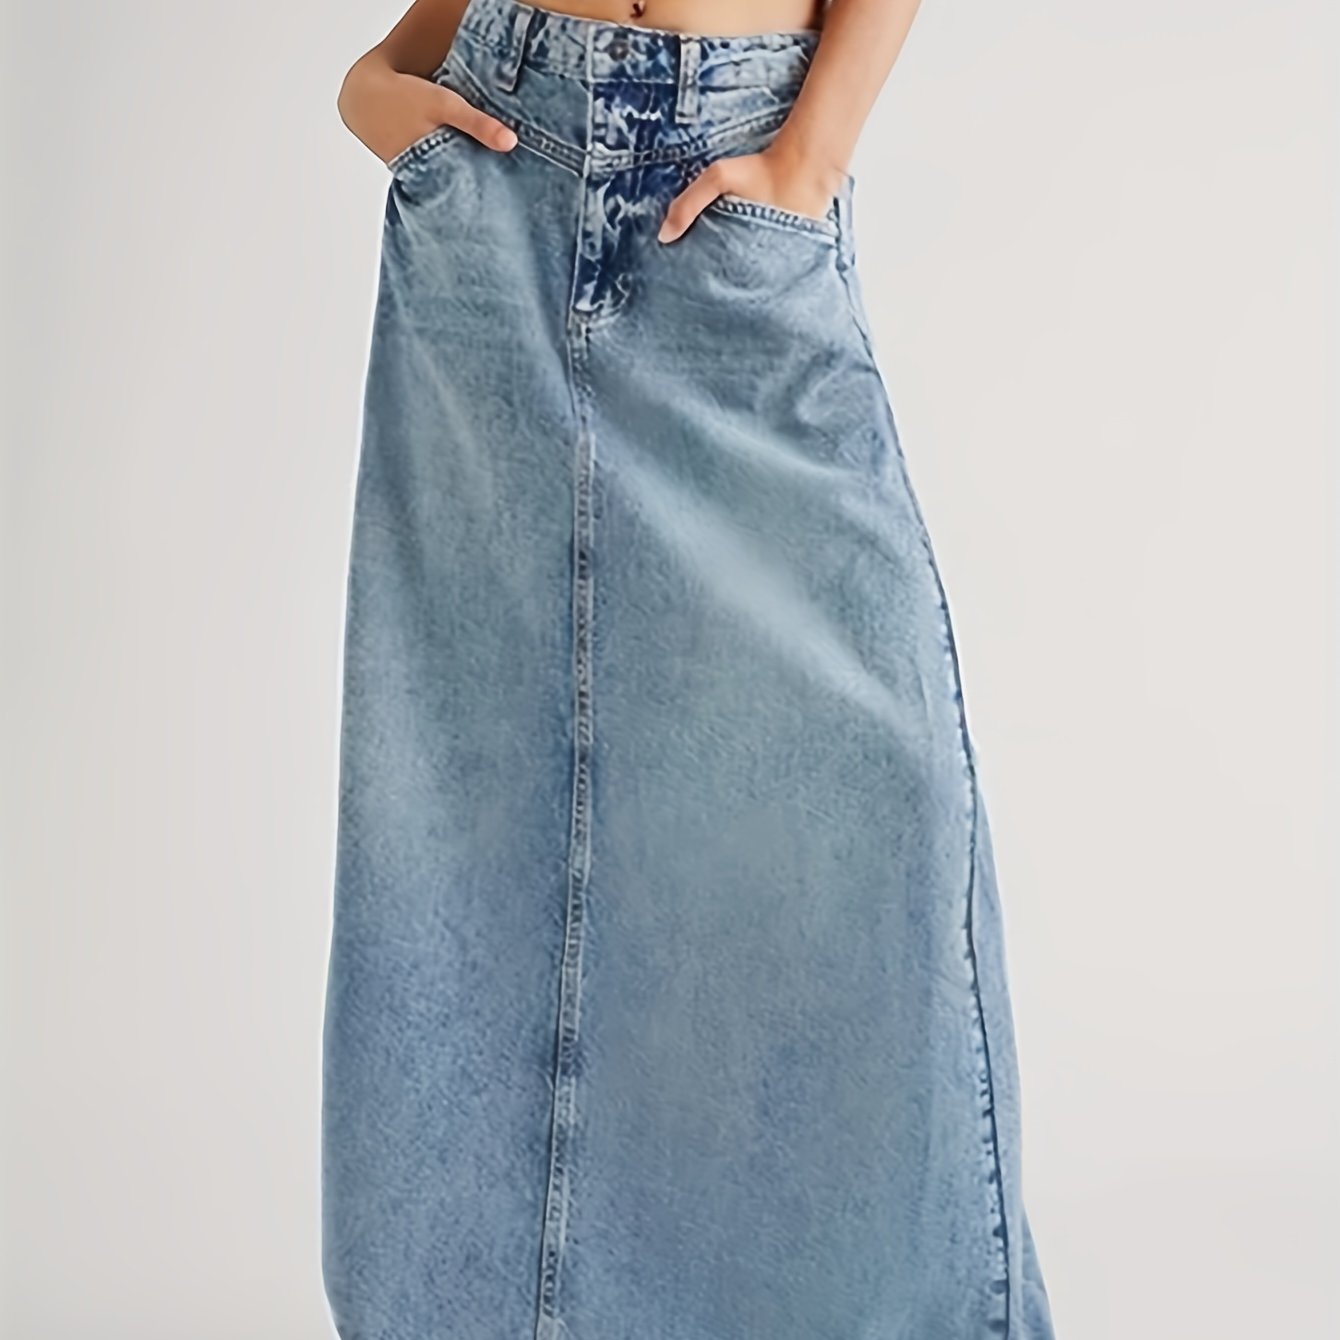 xieyinshe  Raw Hem Slash Pocket Loose Fit Denim Skirt, Vintage Style A-line Maxi Denim Skirt, Women's Denim Jeans & Clothing